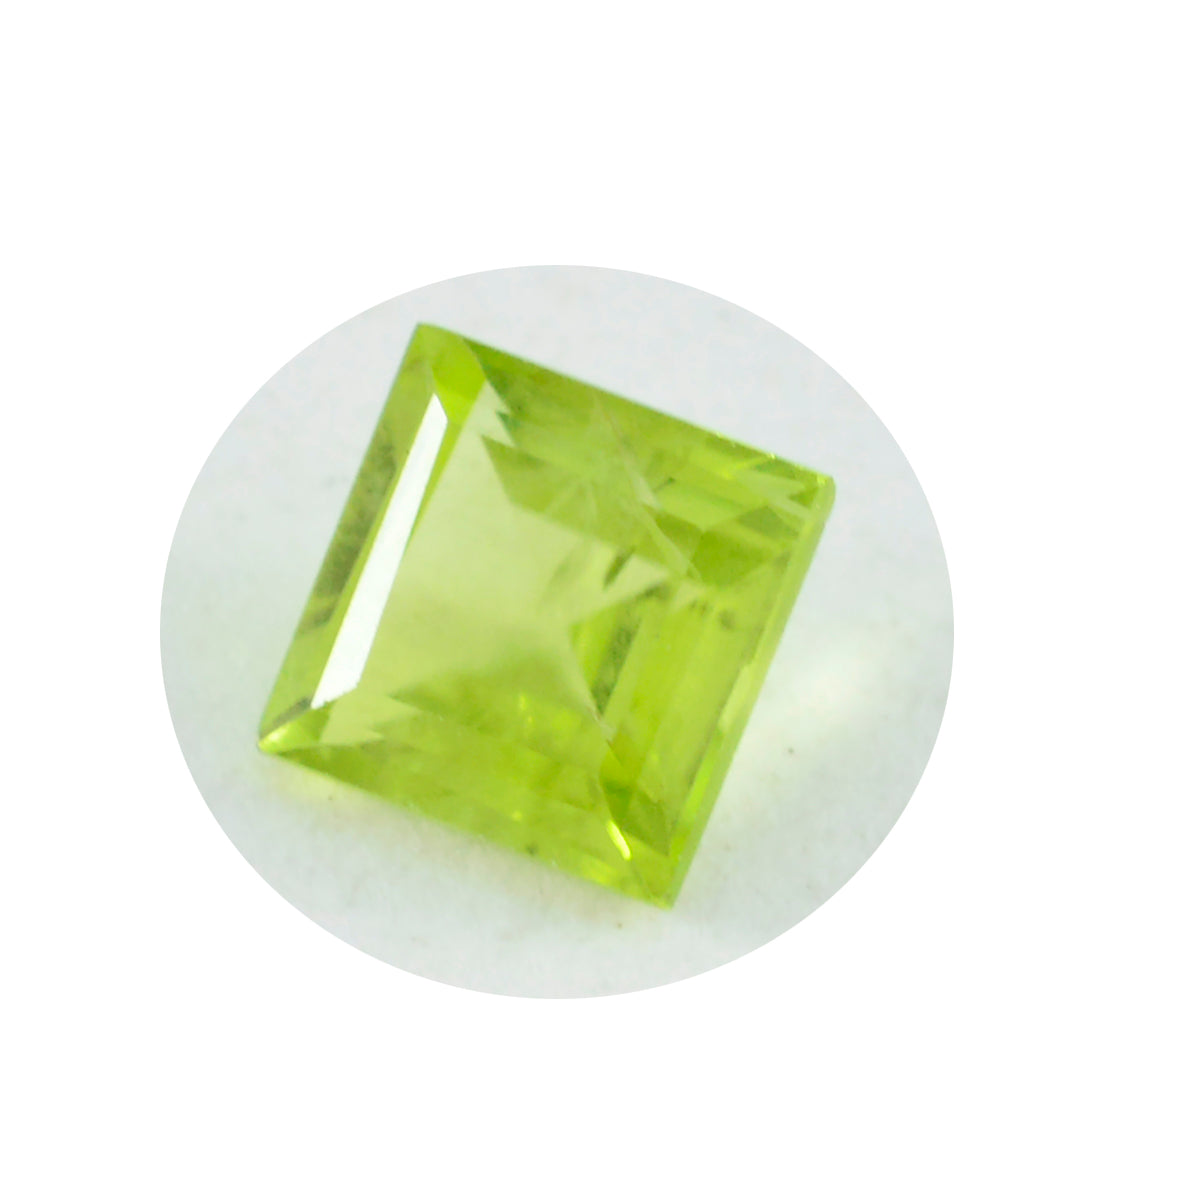 Riyogems 1PC Natural Green Peridot Faceted 13x13 mm Square Shape startling Quality Loose Gemstone